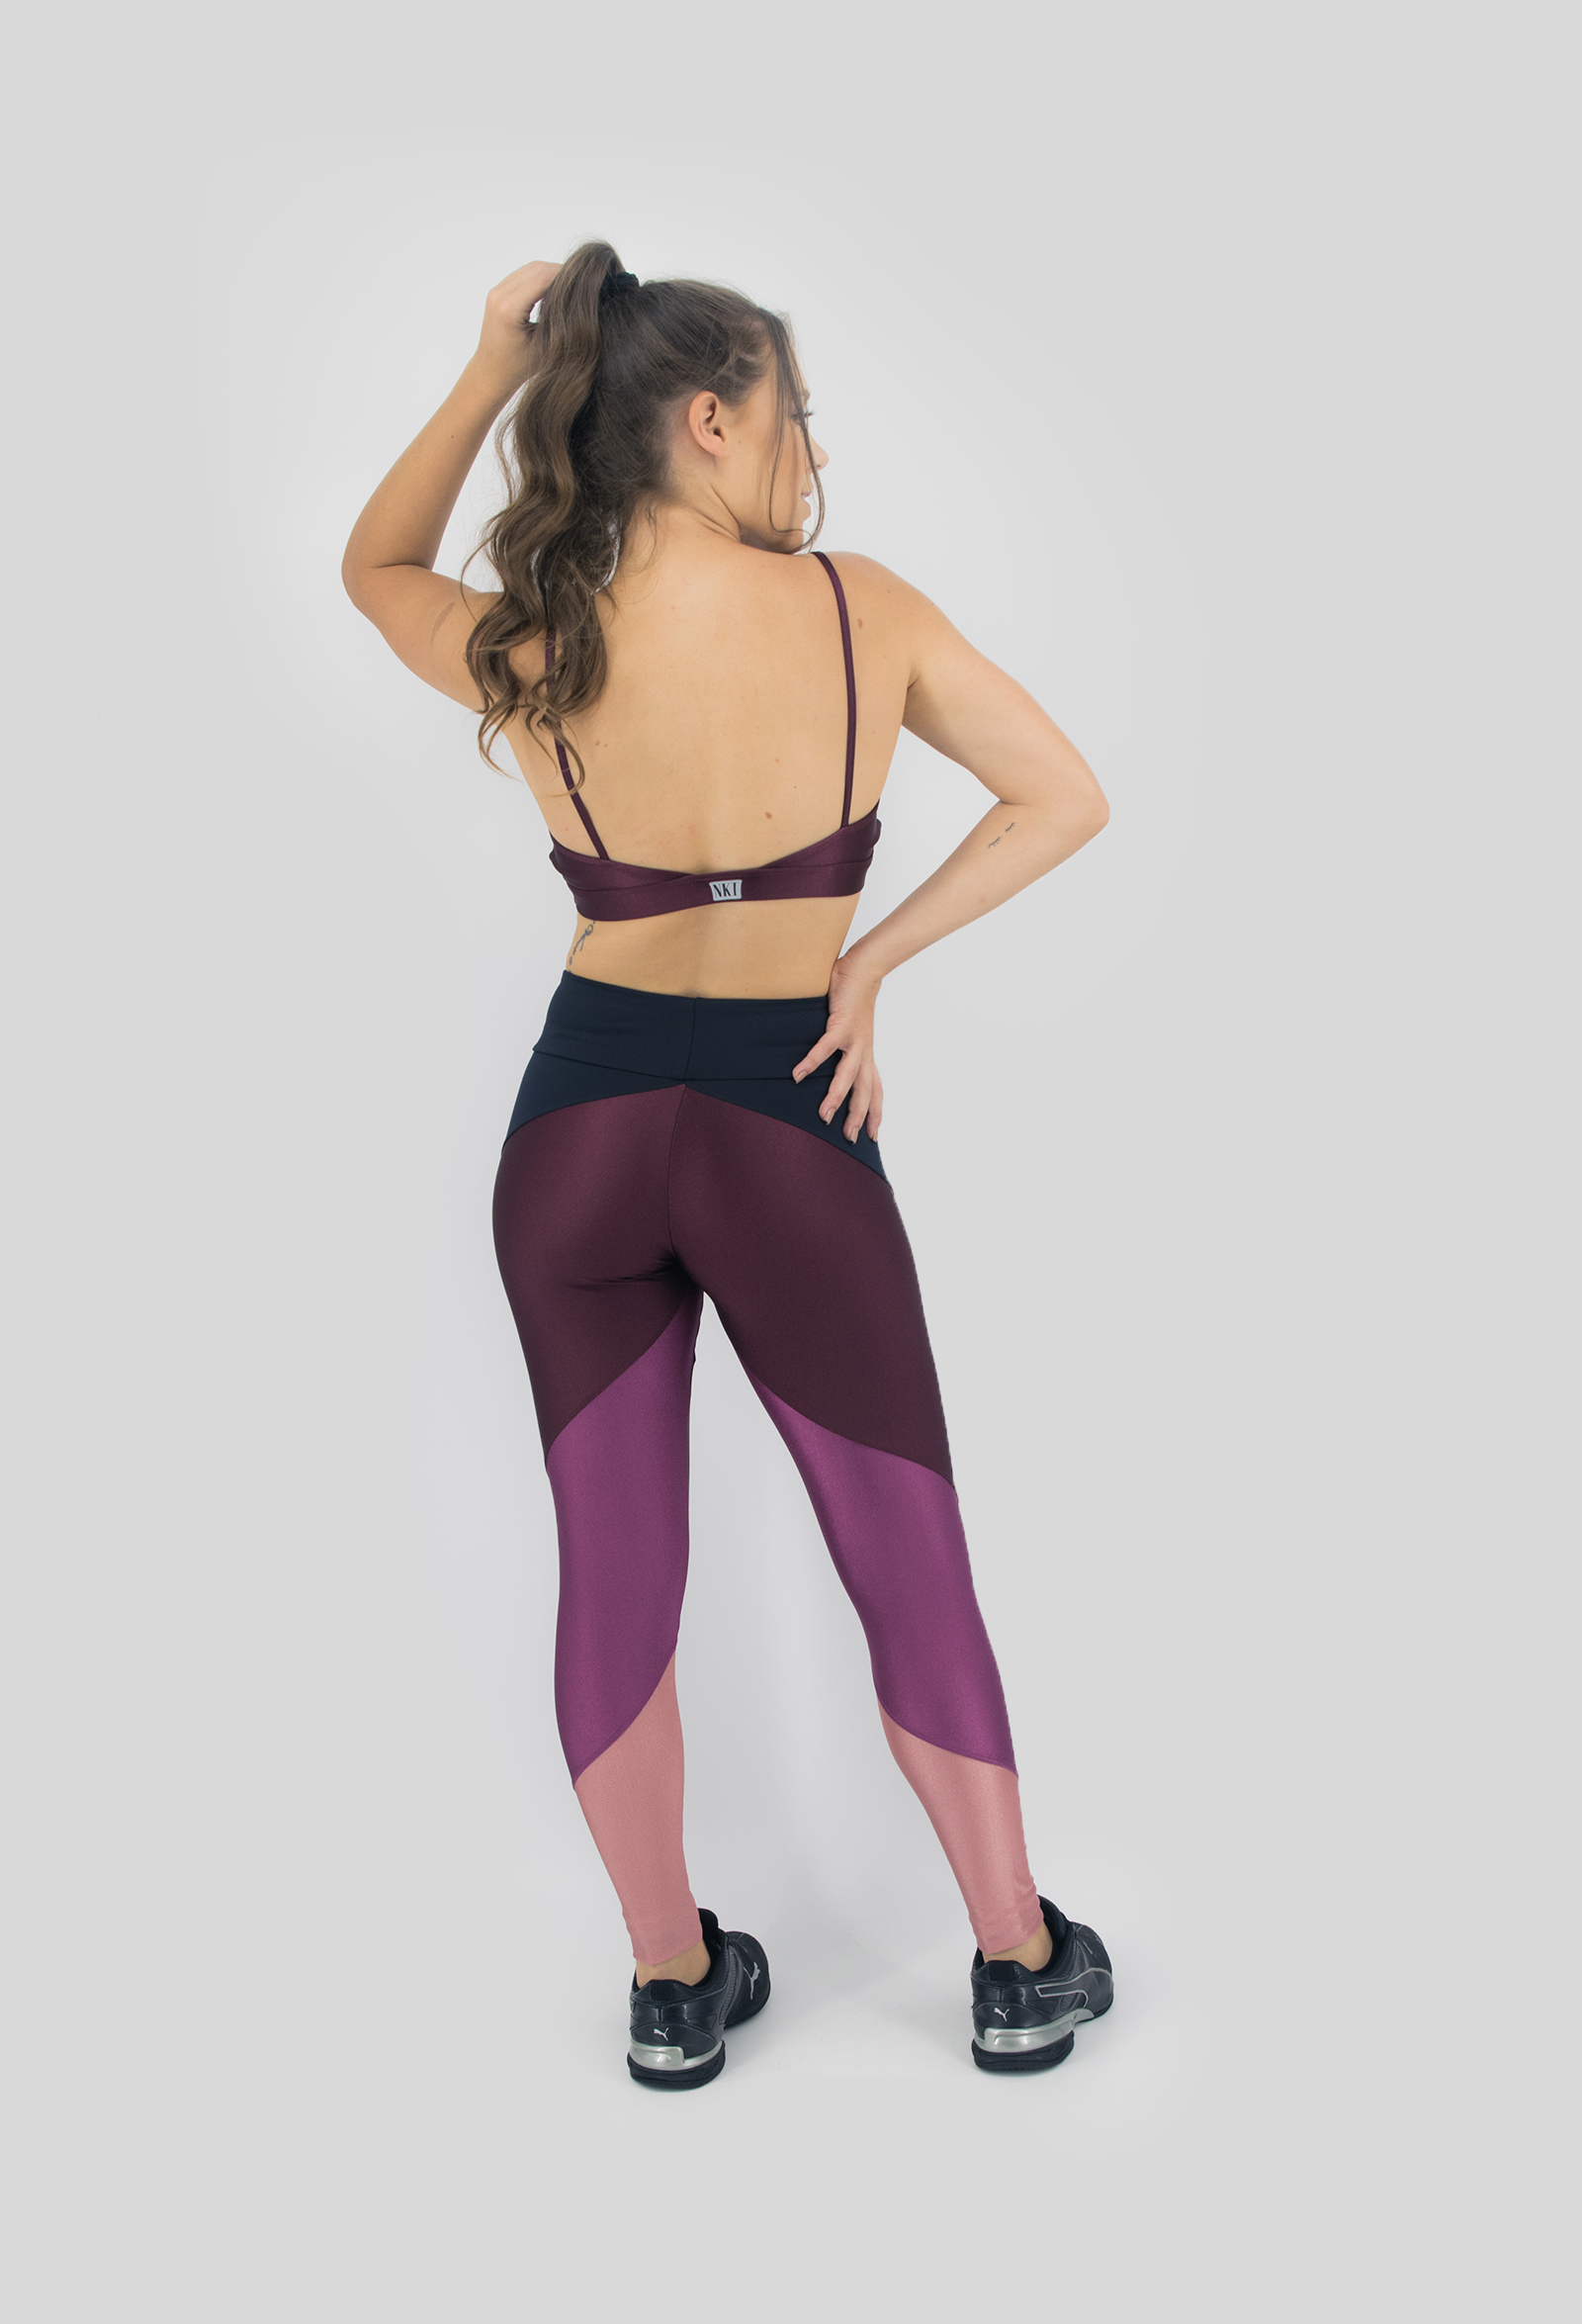 Legging Profusion Bordo, Coleção Move Your Body - NKT Fitwear Moda Fitness